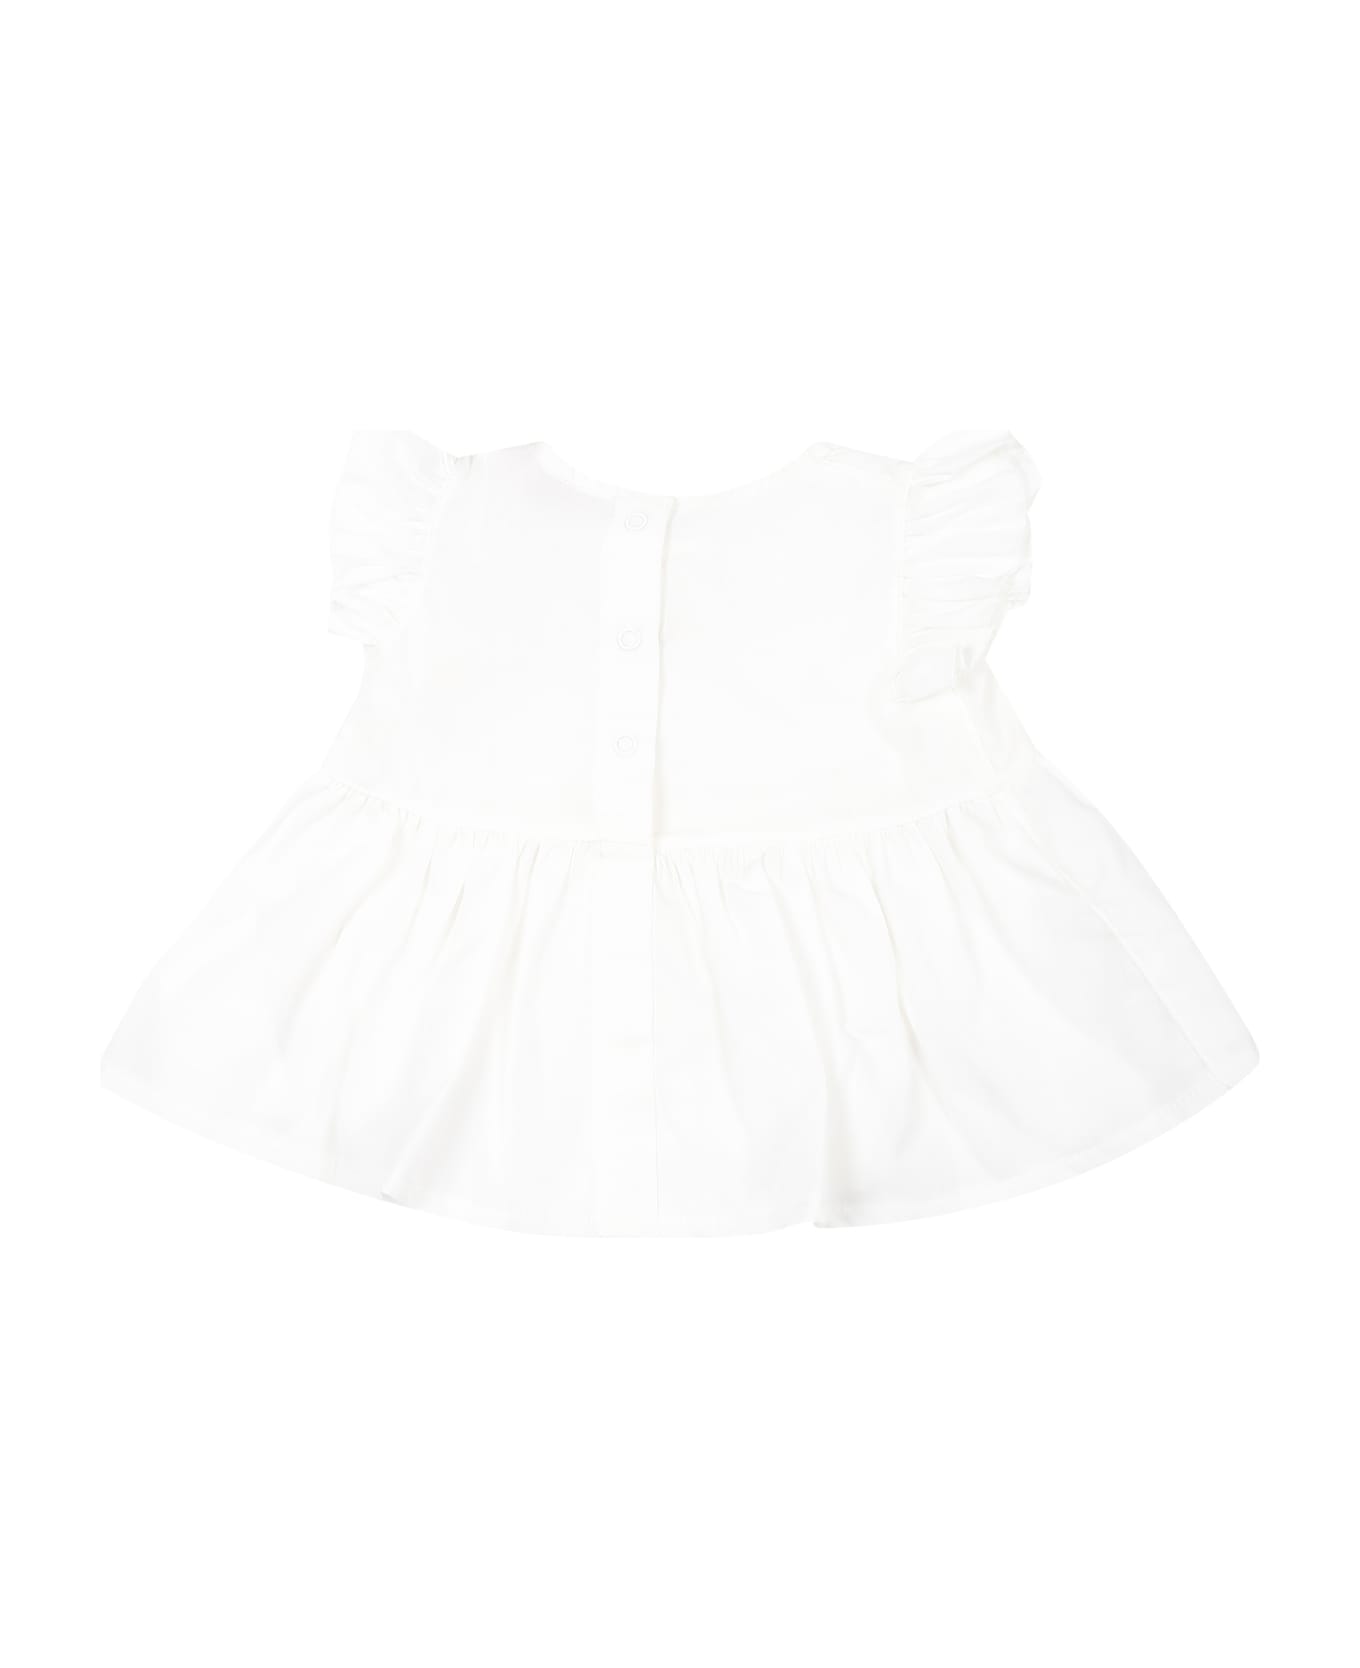 Monnalisa White Set For Baby Girl With Daisy Print - White